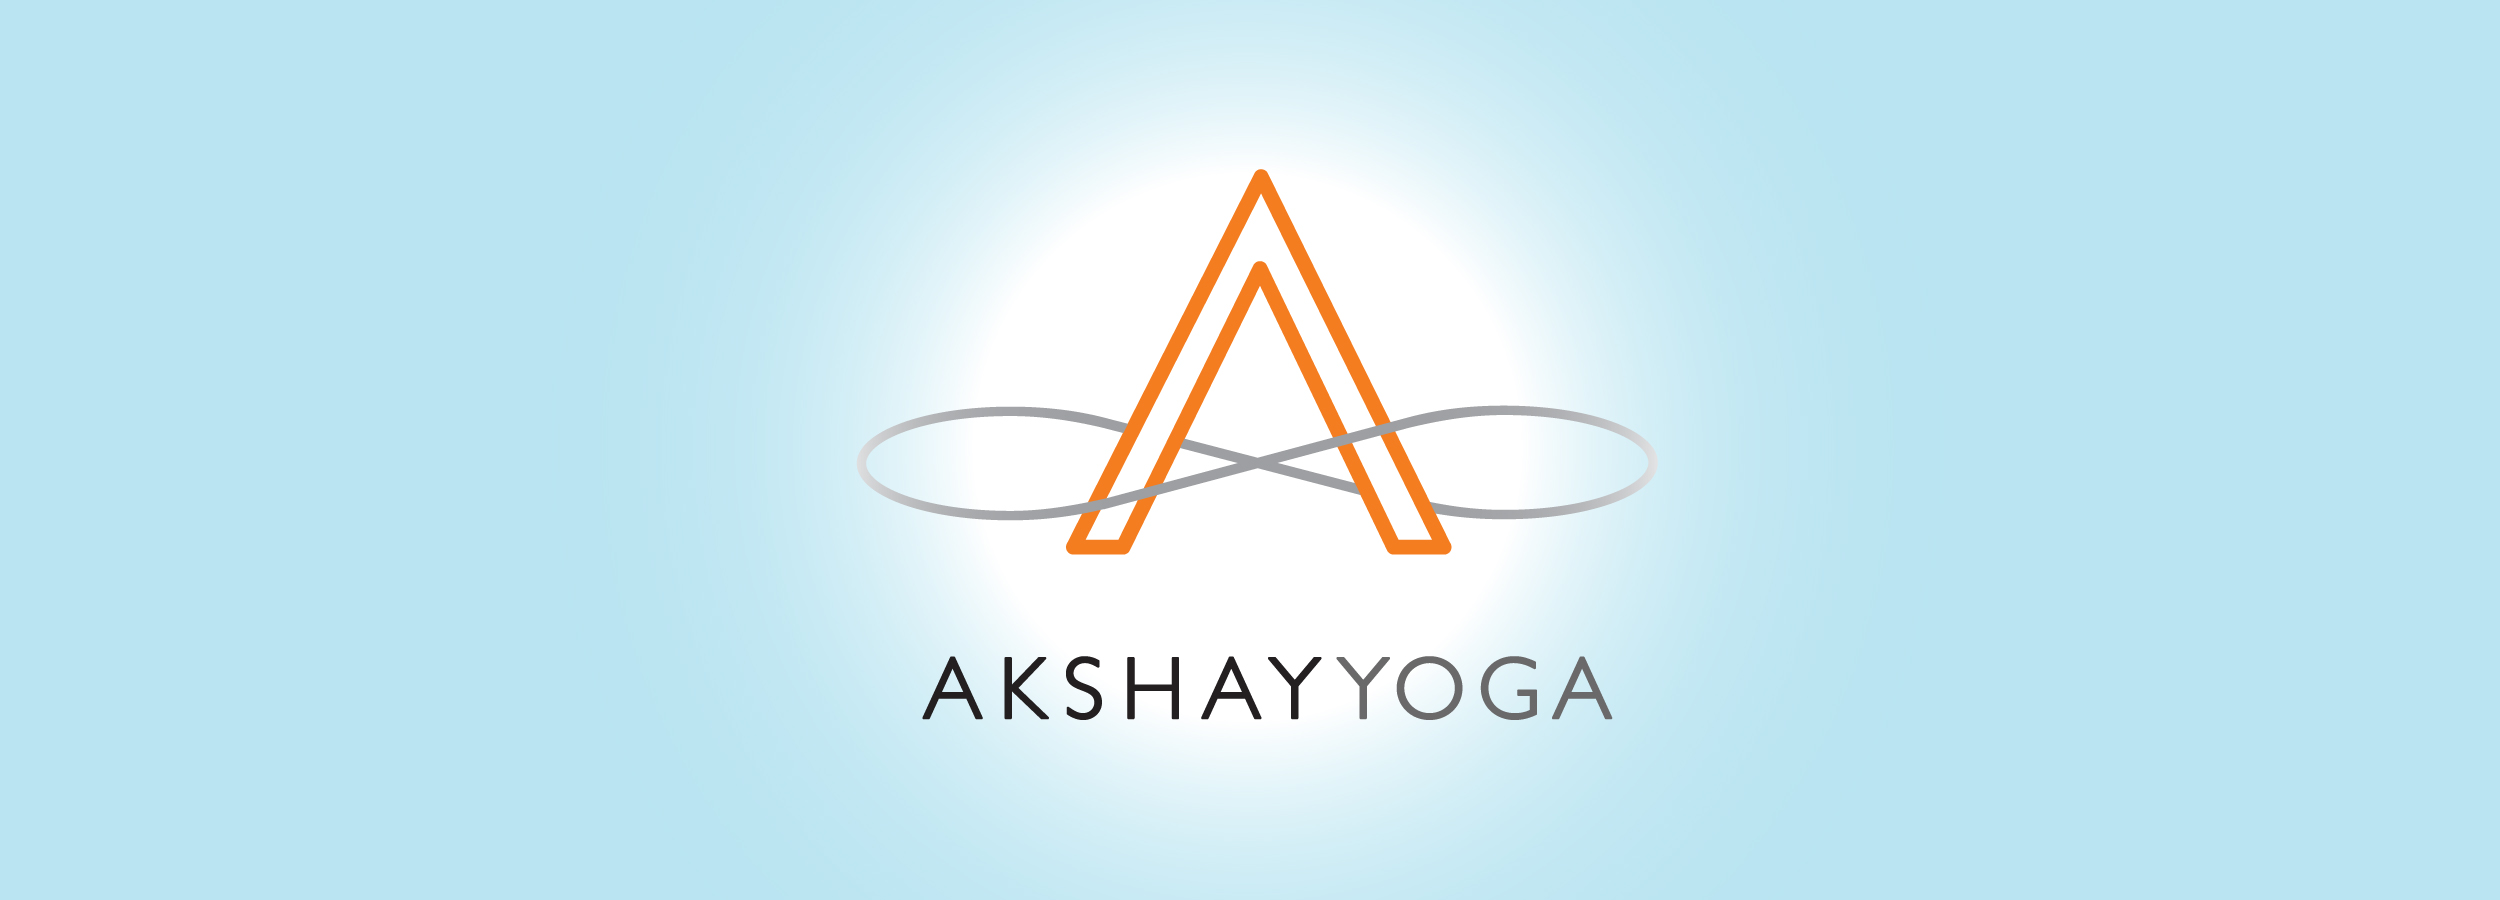 Akshay Yoga the infinite flow